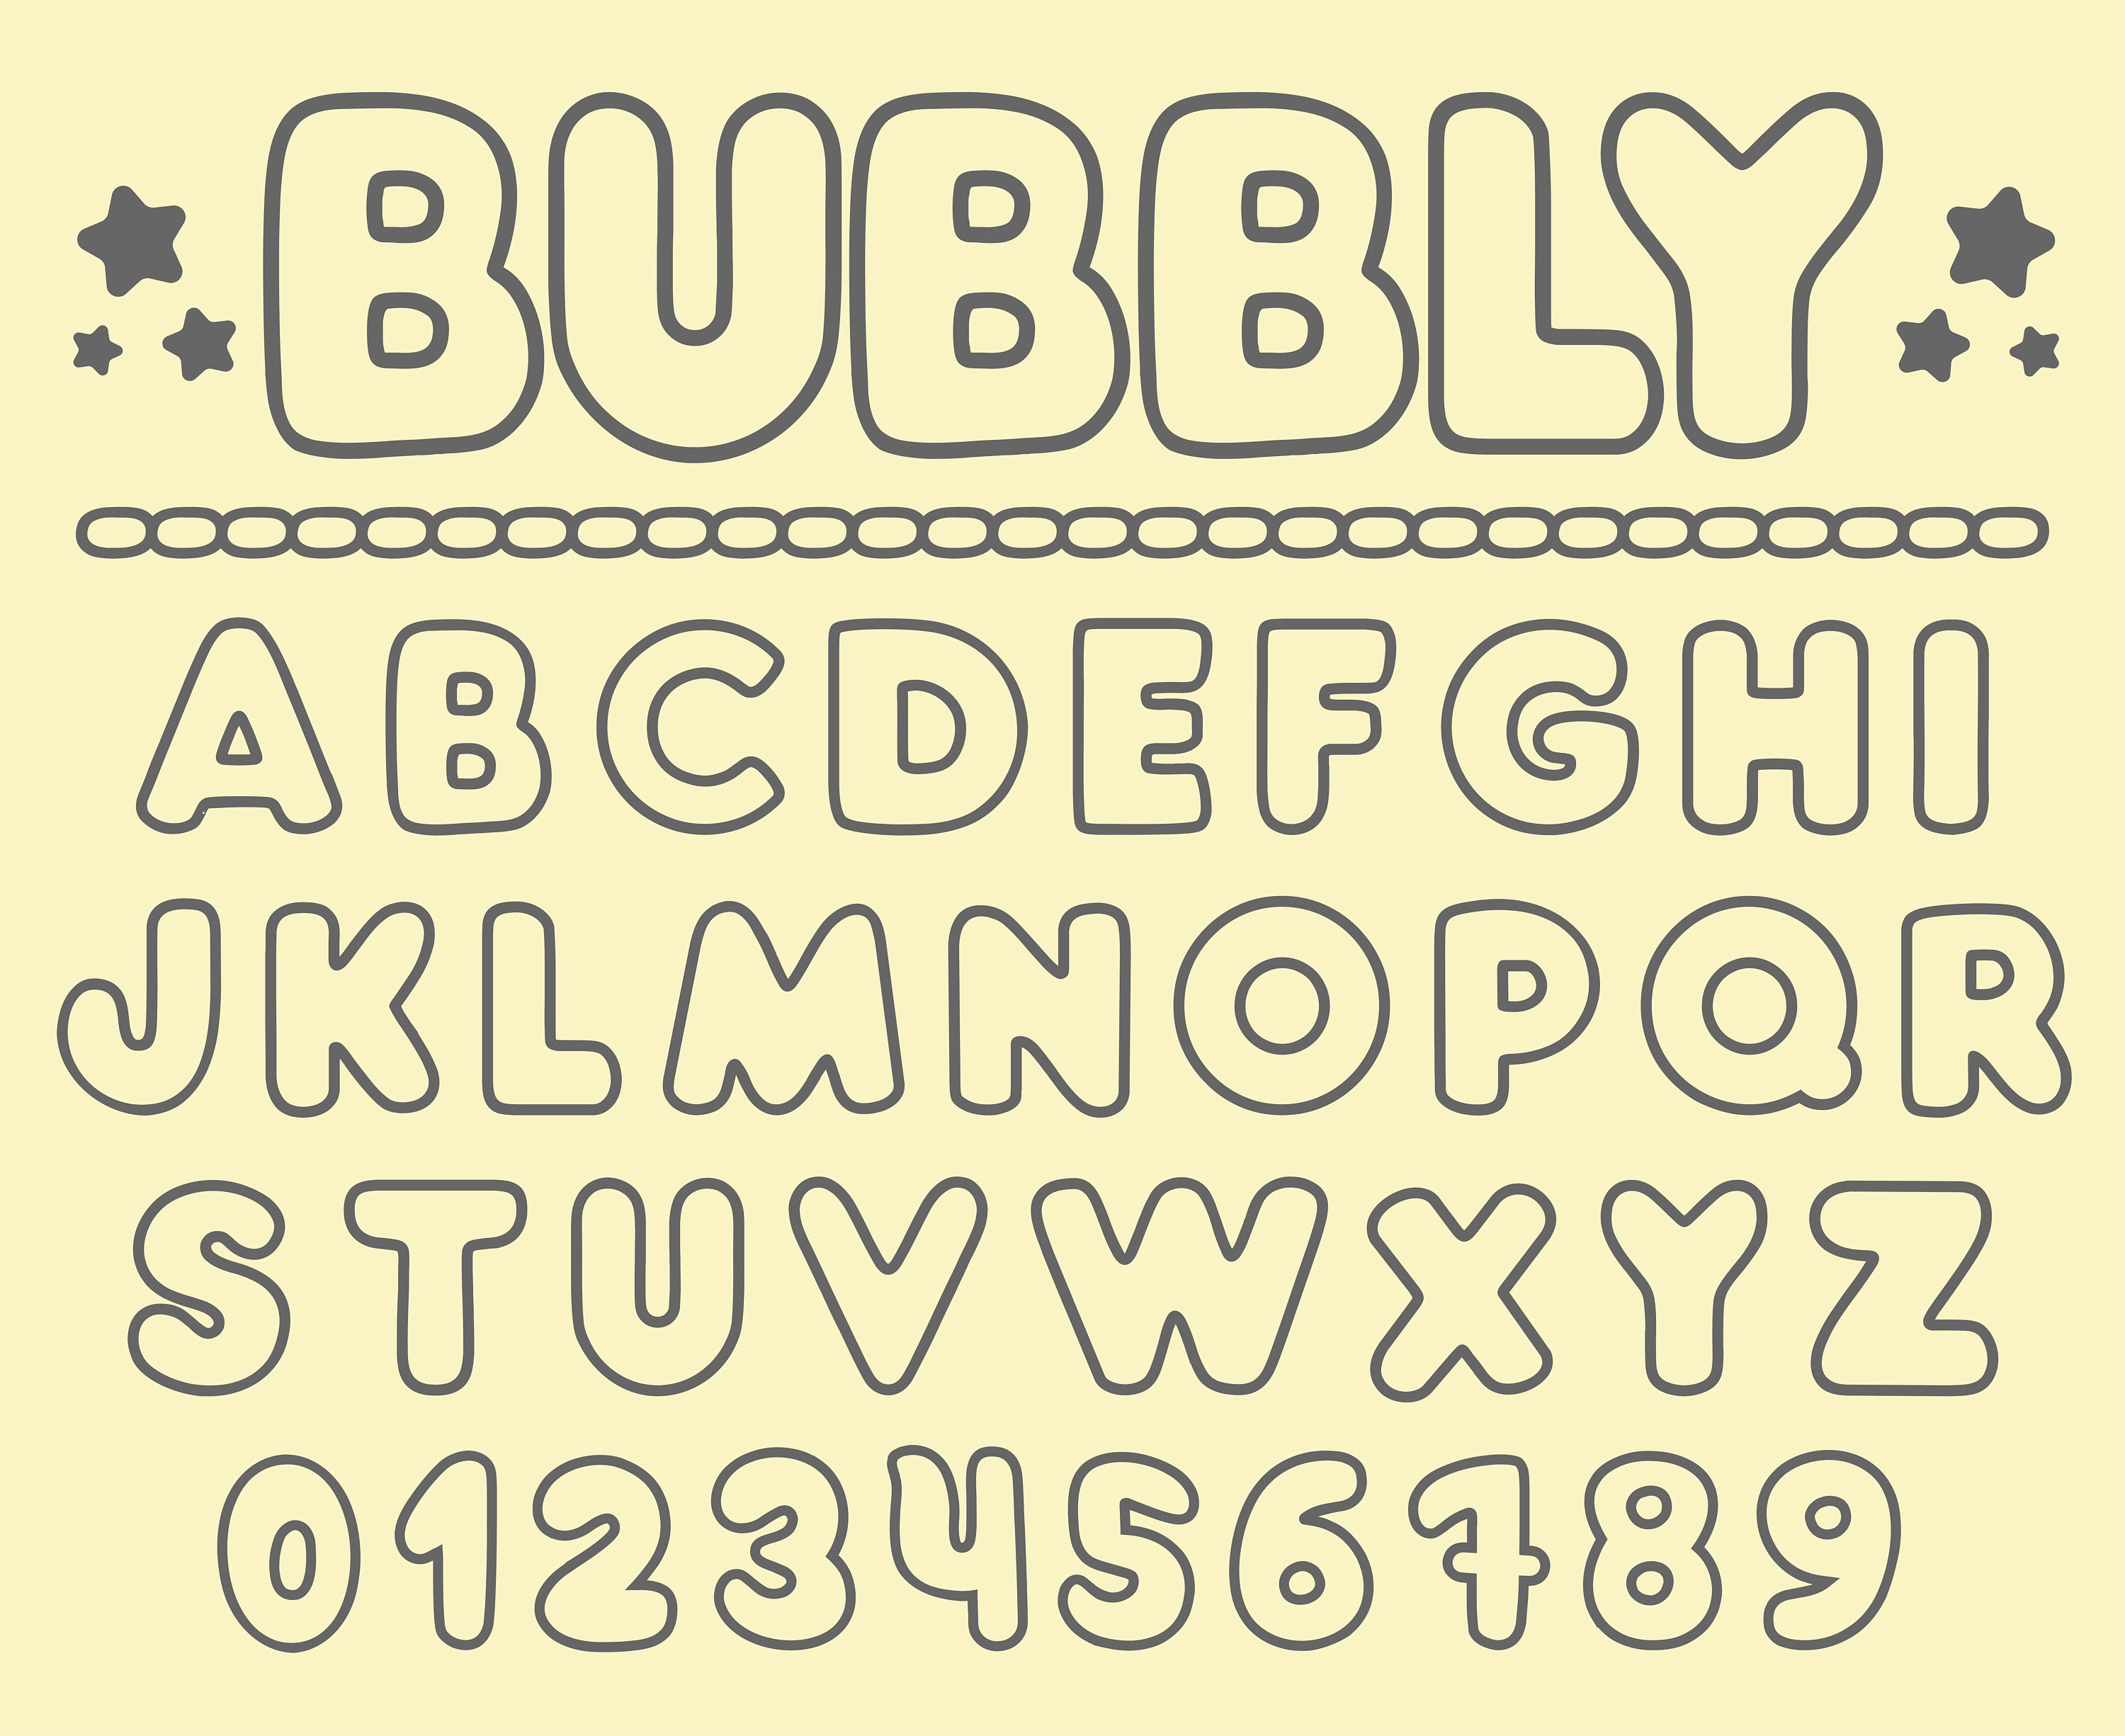 Fancy Bubble Letter Fonts